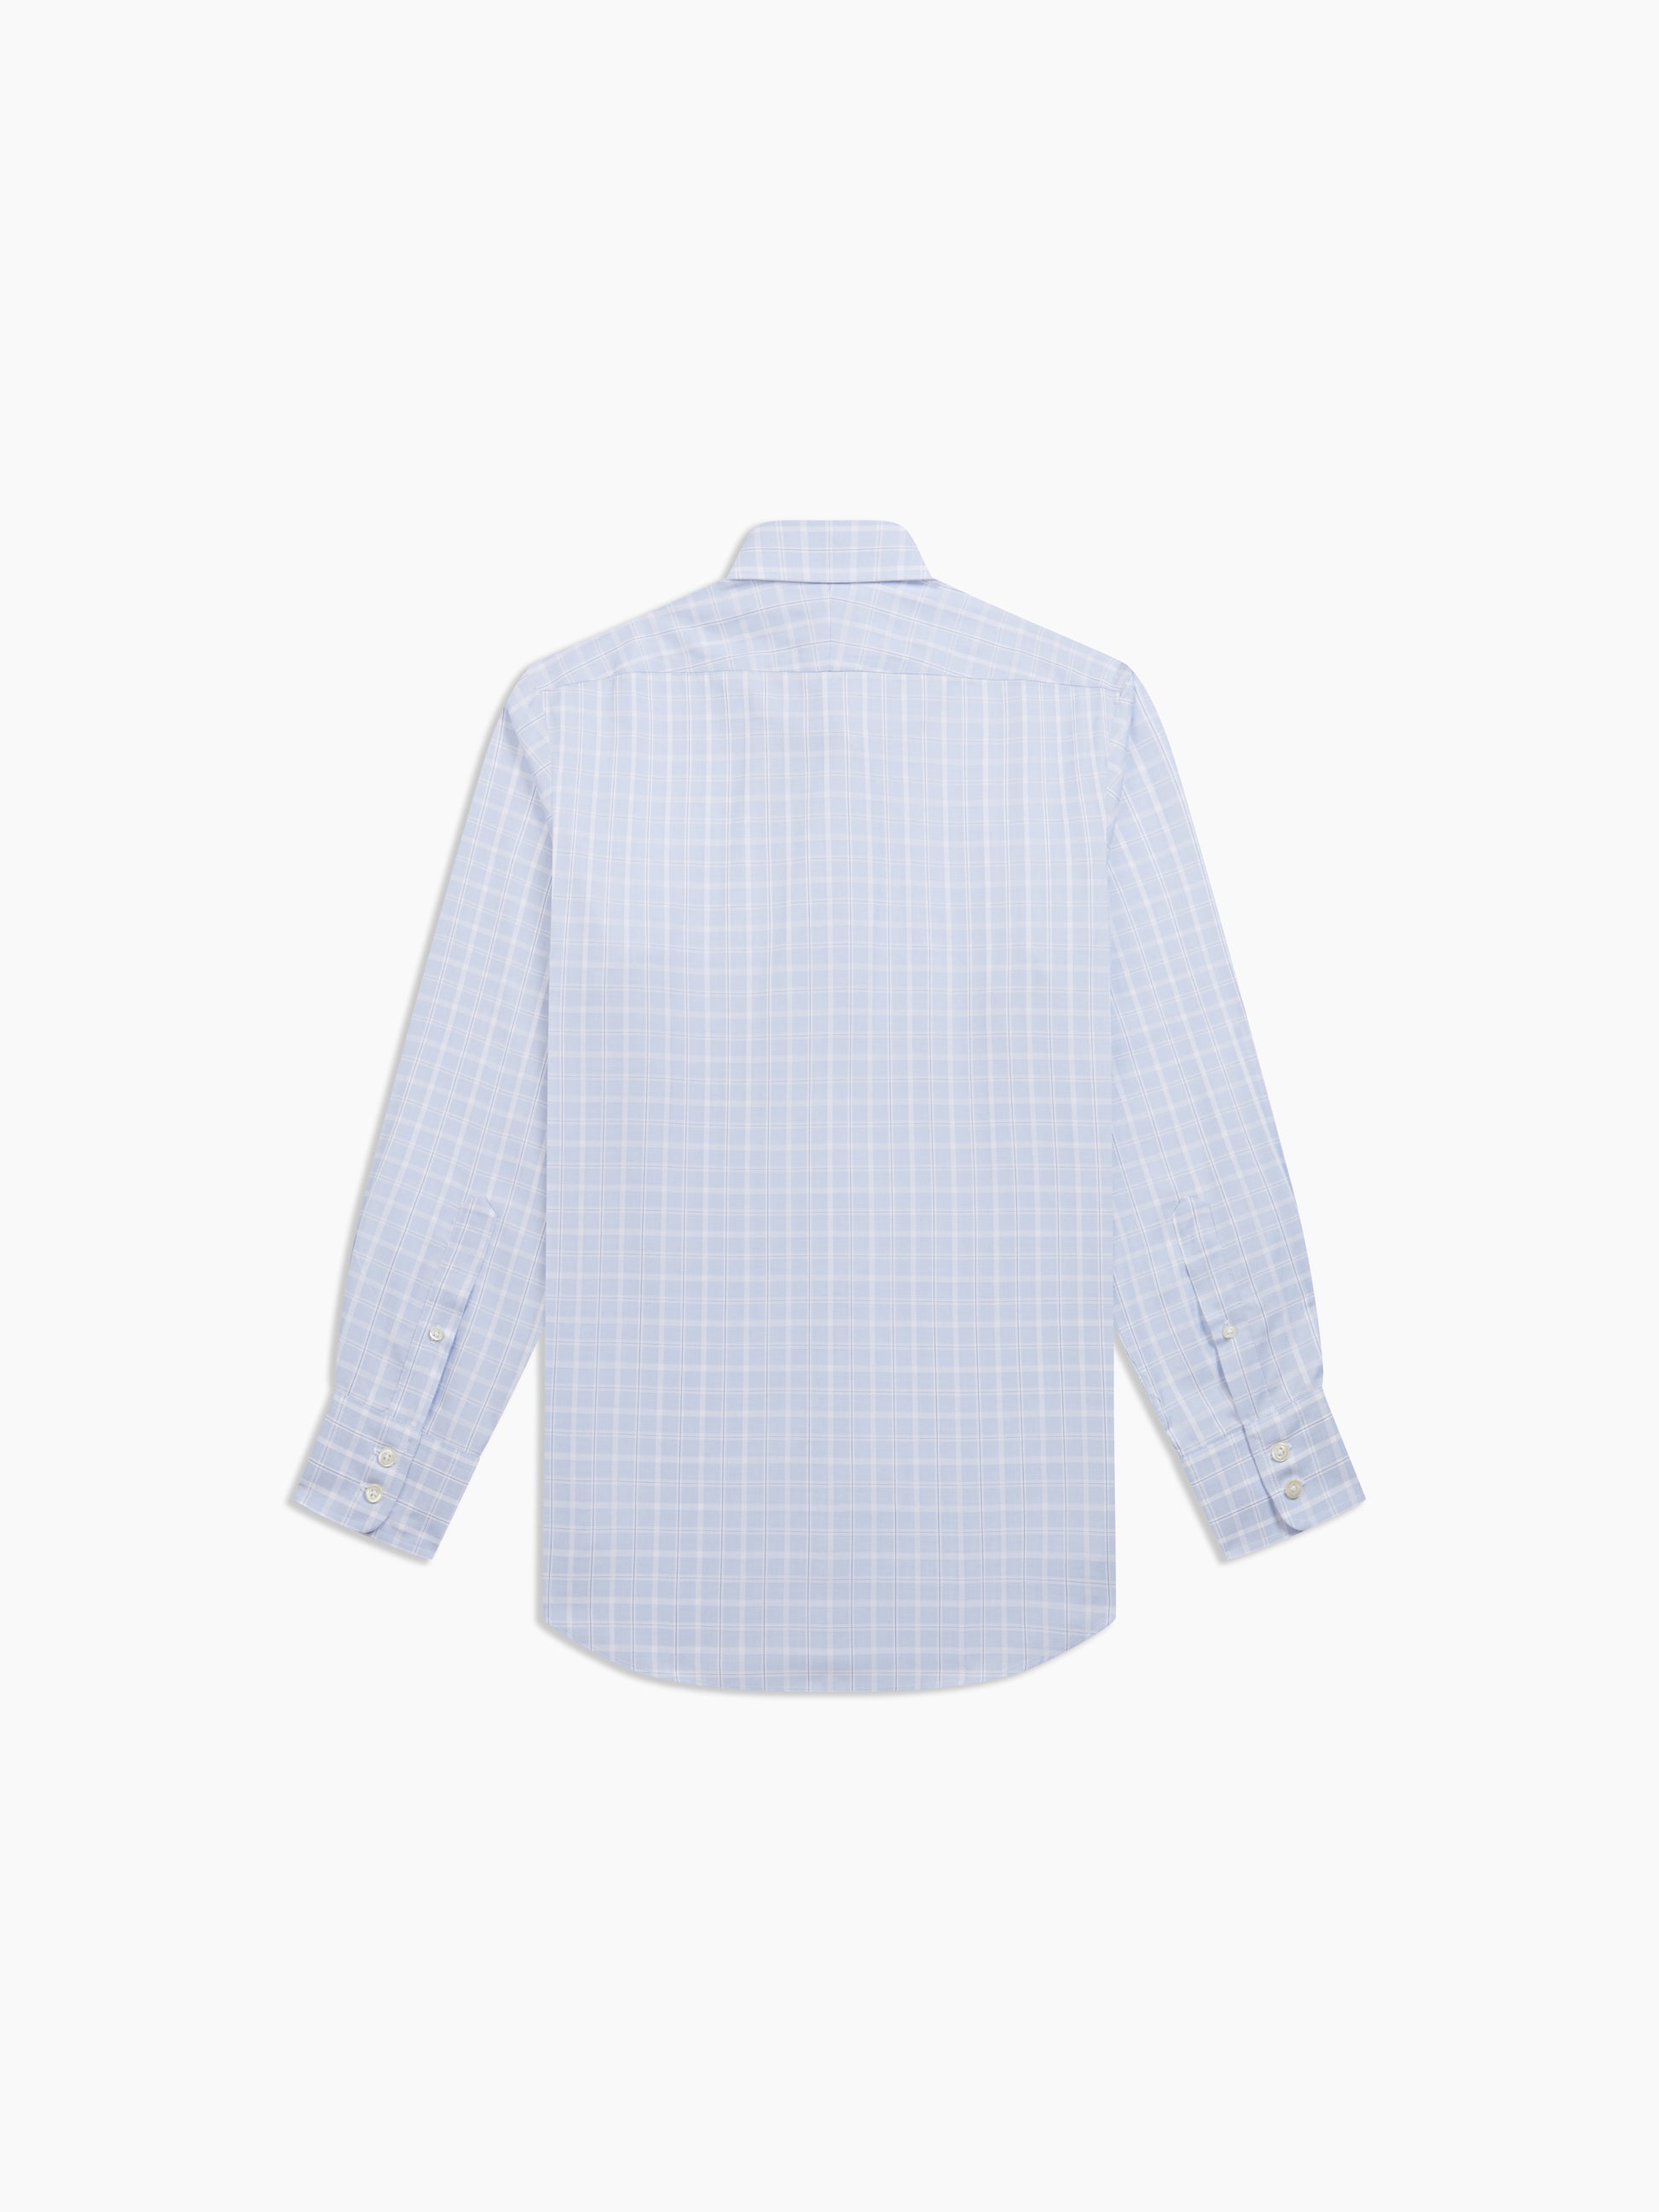 Image 4 of Non-Iron Blue Grid Check Twill Slim Fit Single Cuff Classic Collar Shirt